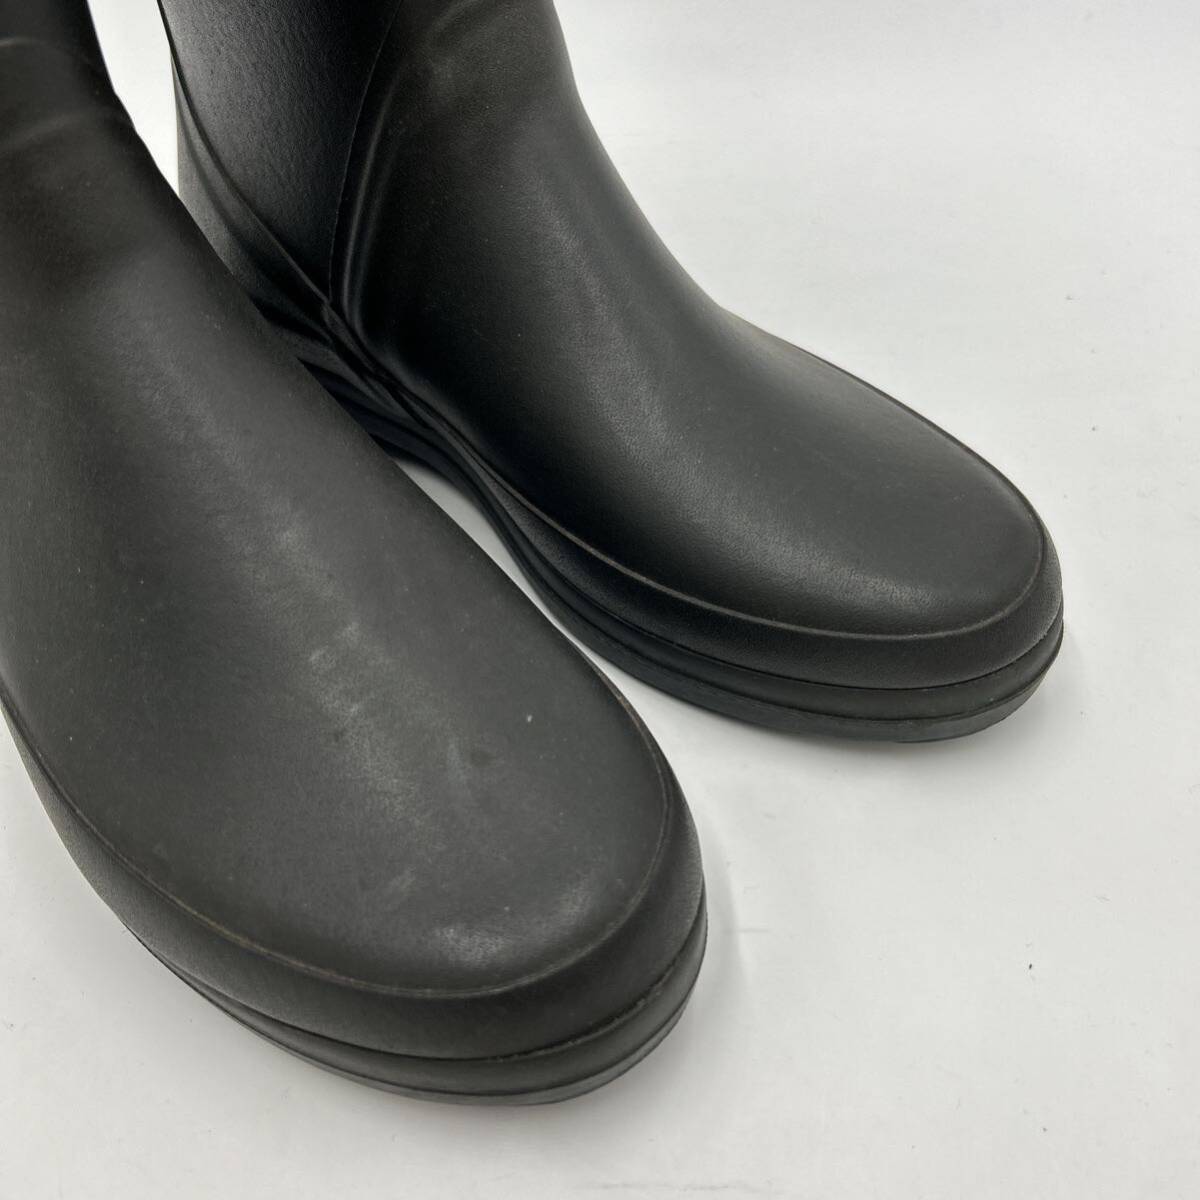 B ■ フランス製 '機能性抜群' AIGLE エーグル 高品質 ラバー素材 ロングブーツ 長靴 レインブーツ EU37 23.5cm レディース 婦人靴 091643_画像4